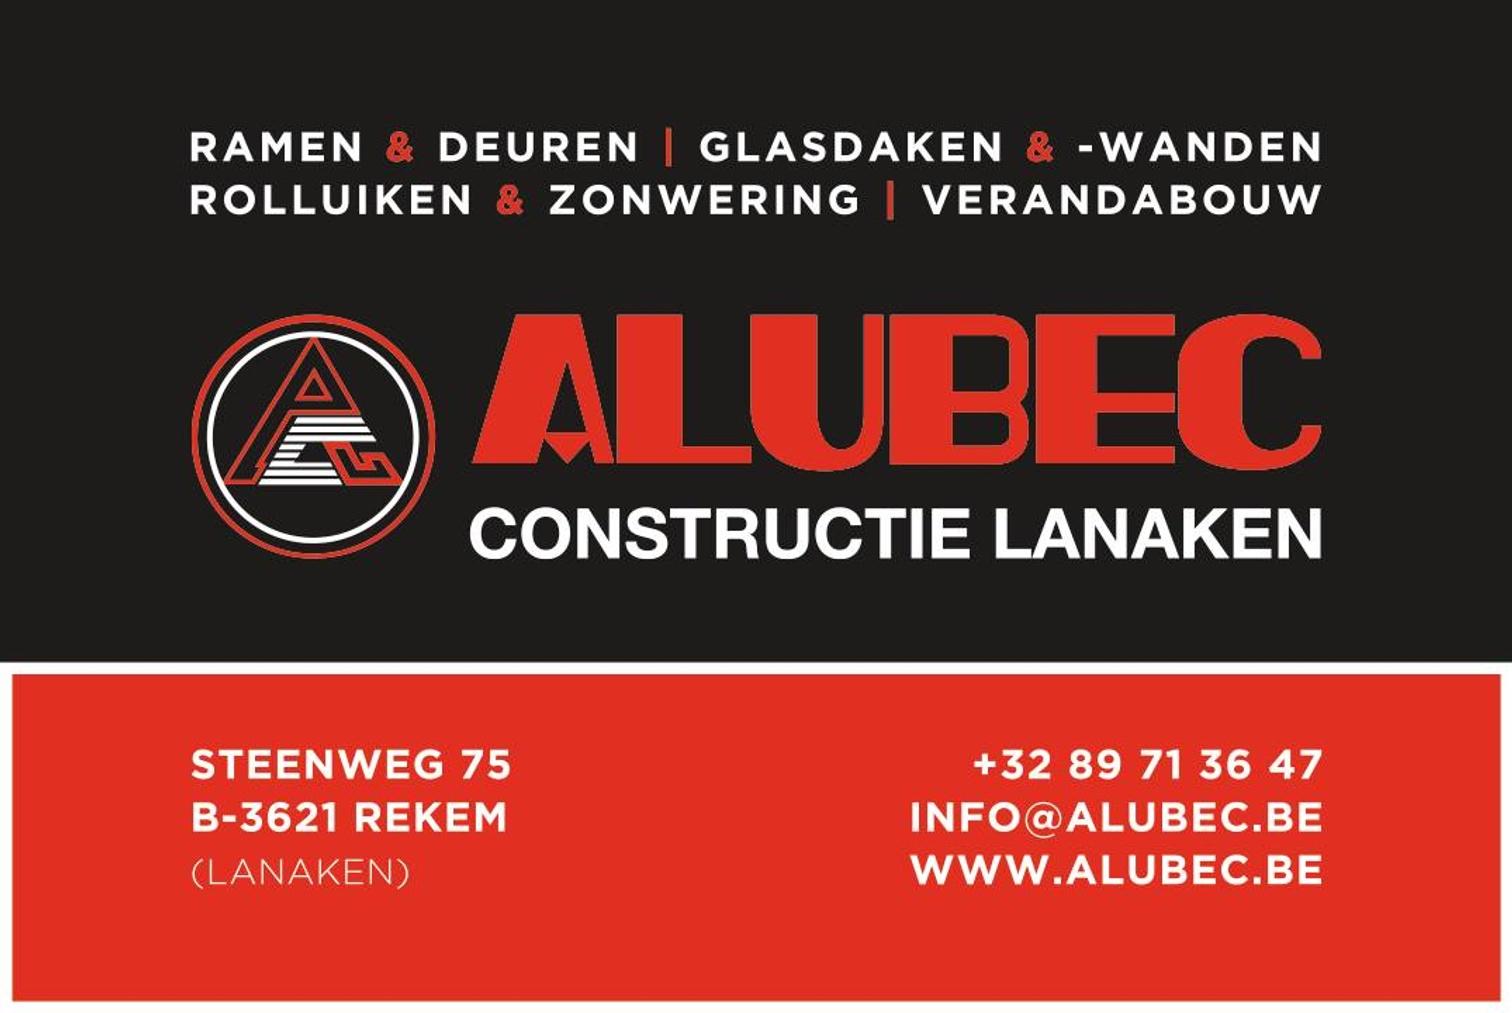 Alubec Constructie Lanaken BV logo